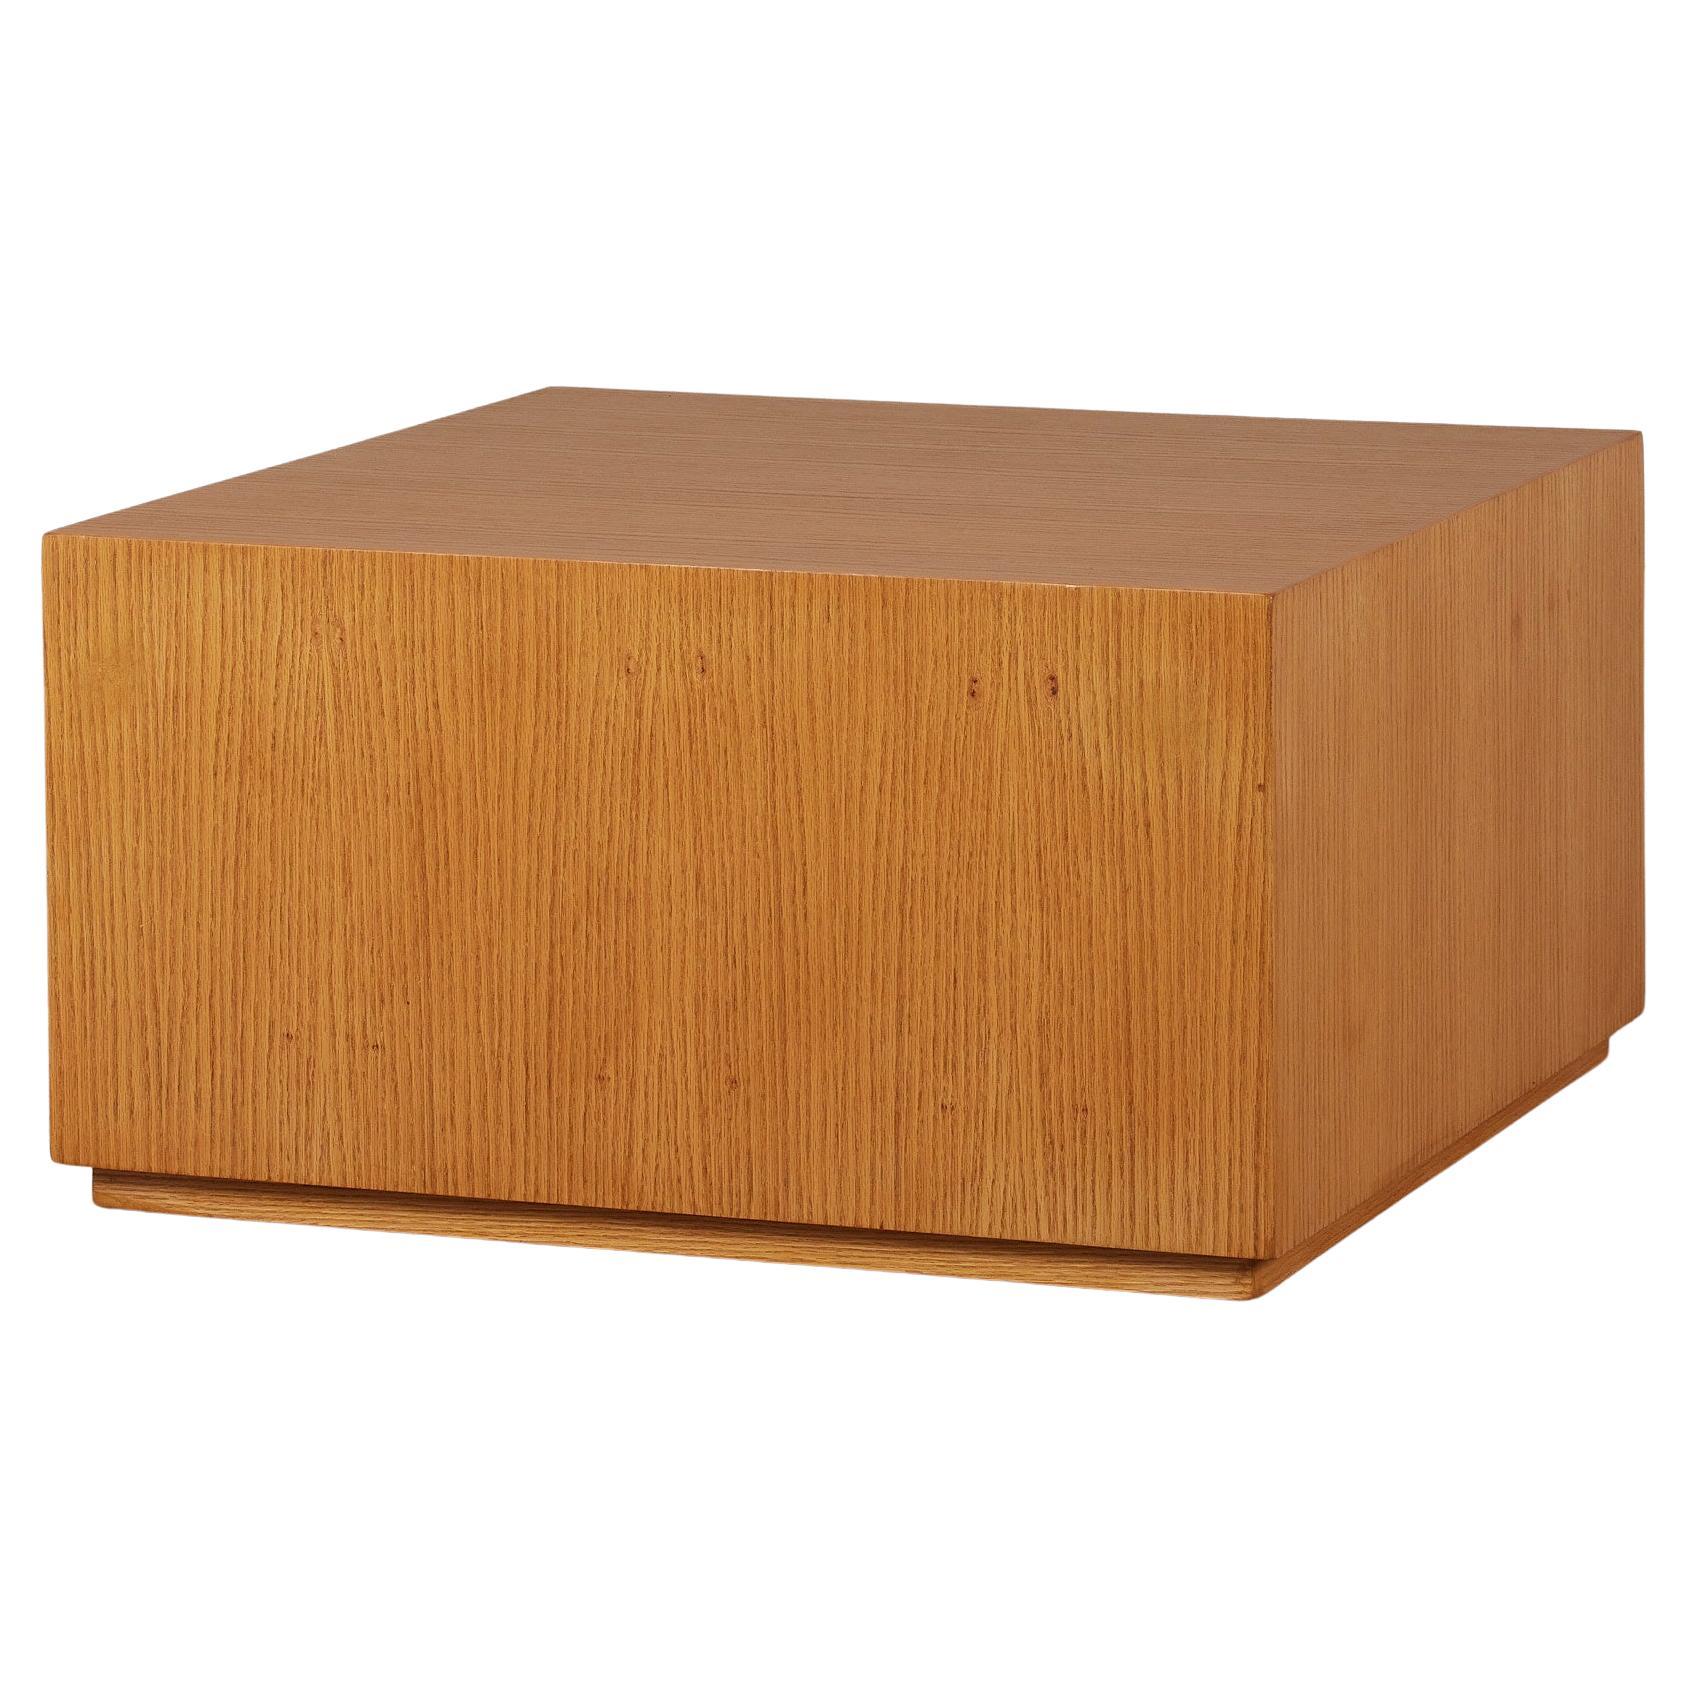 Minimalist Oak Cube Table Pedestal For Sale